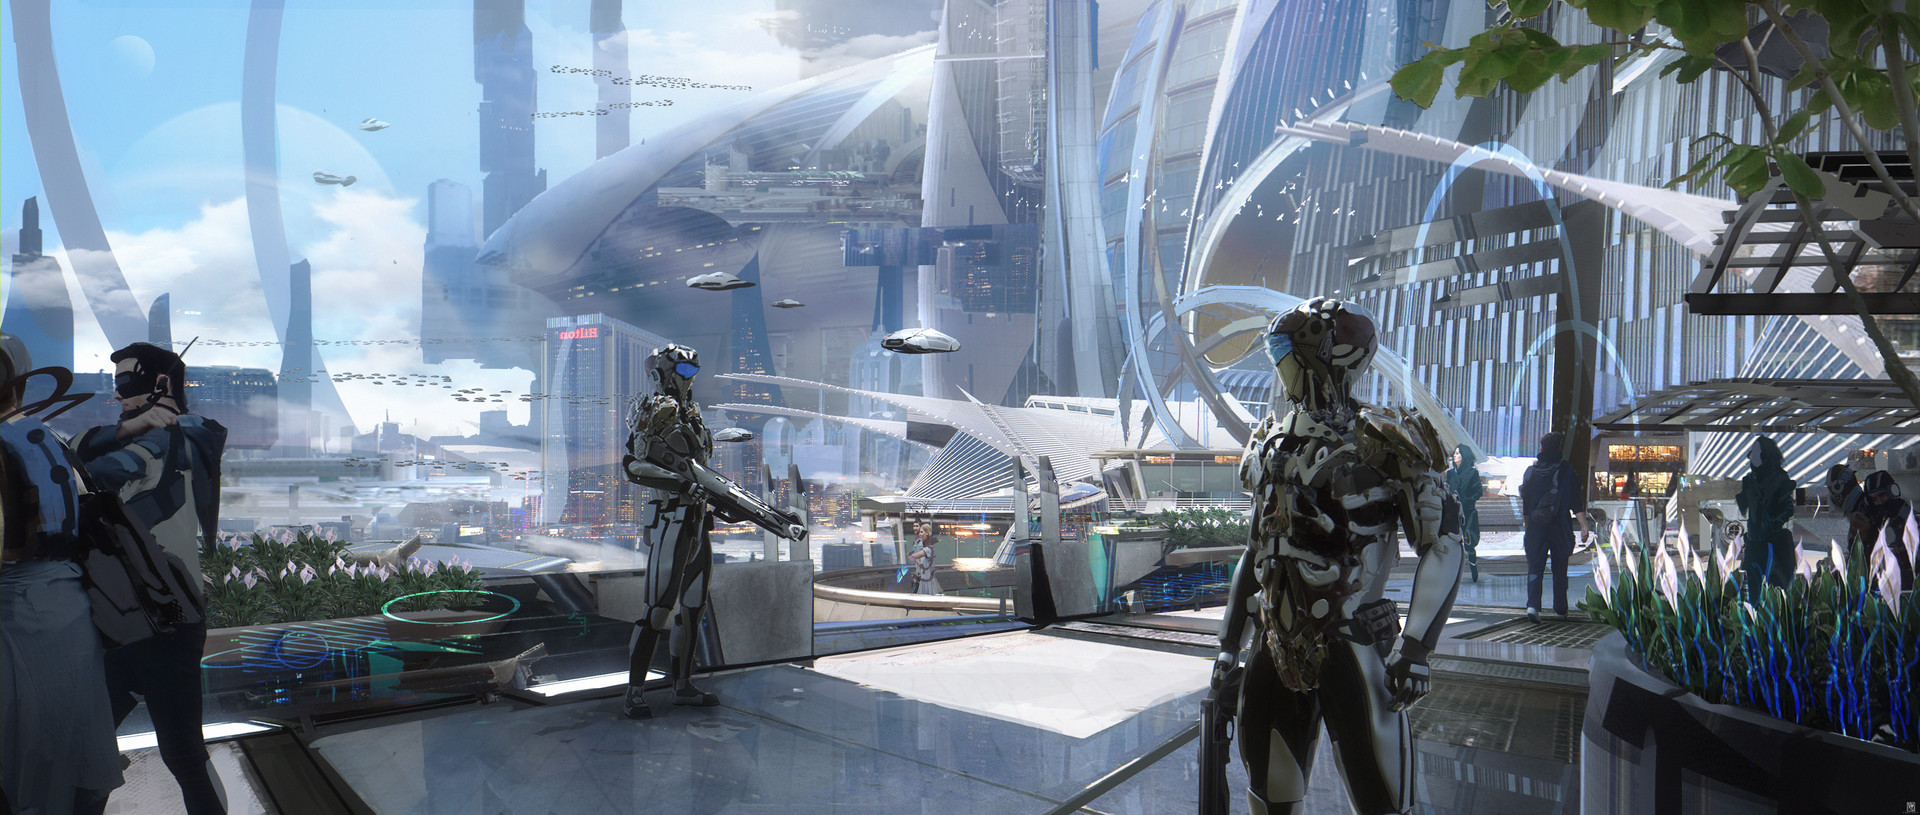 soldier, Police, Cyberpunk, Science fiction Wallpaper